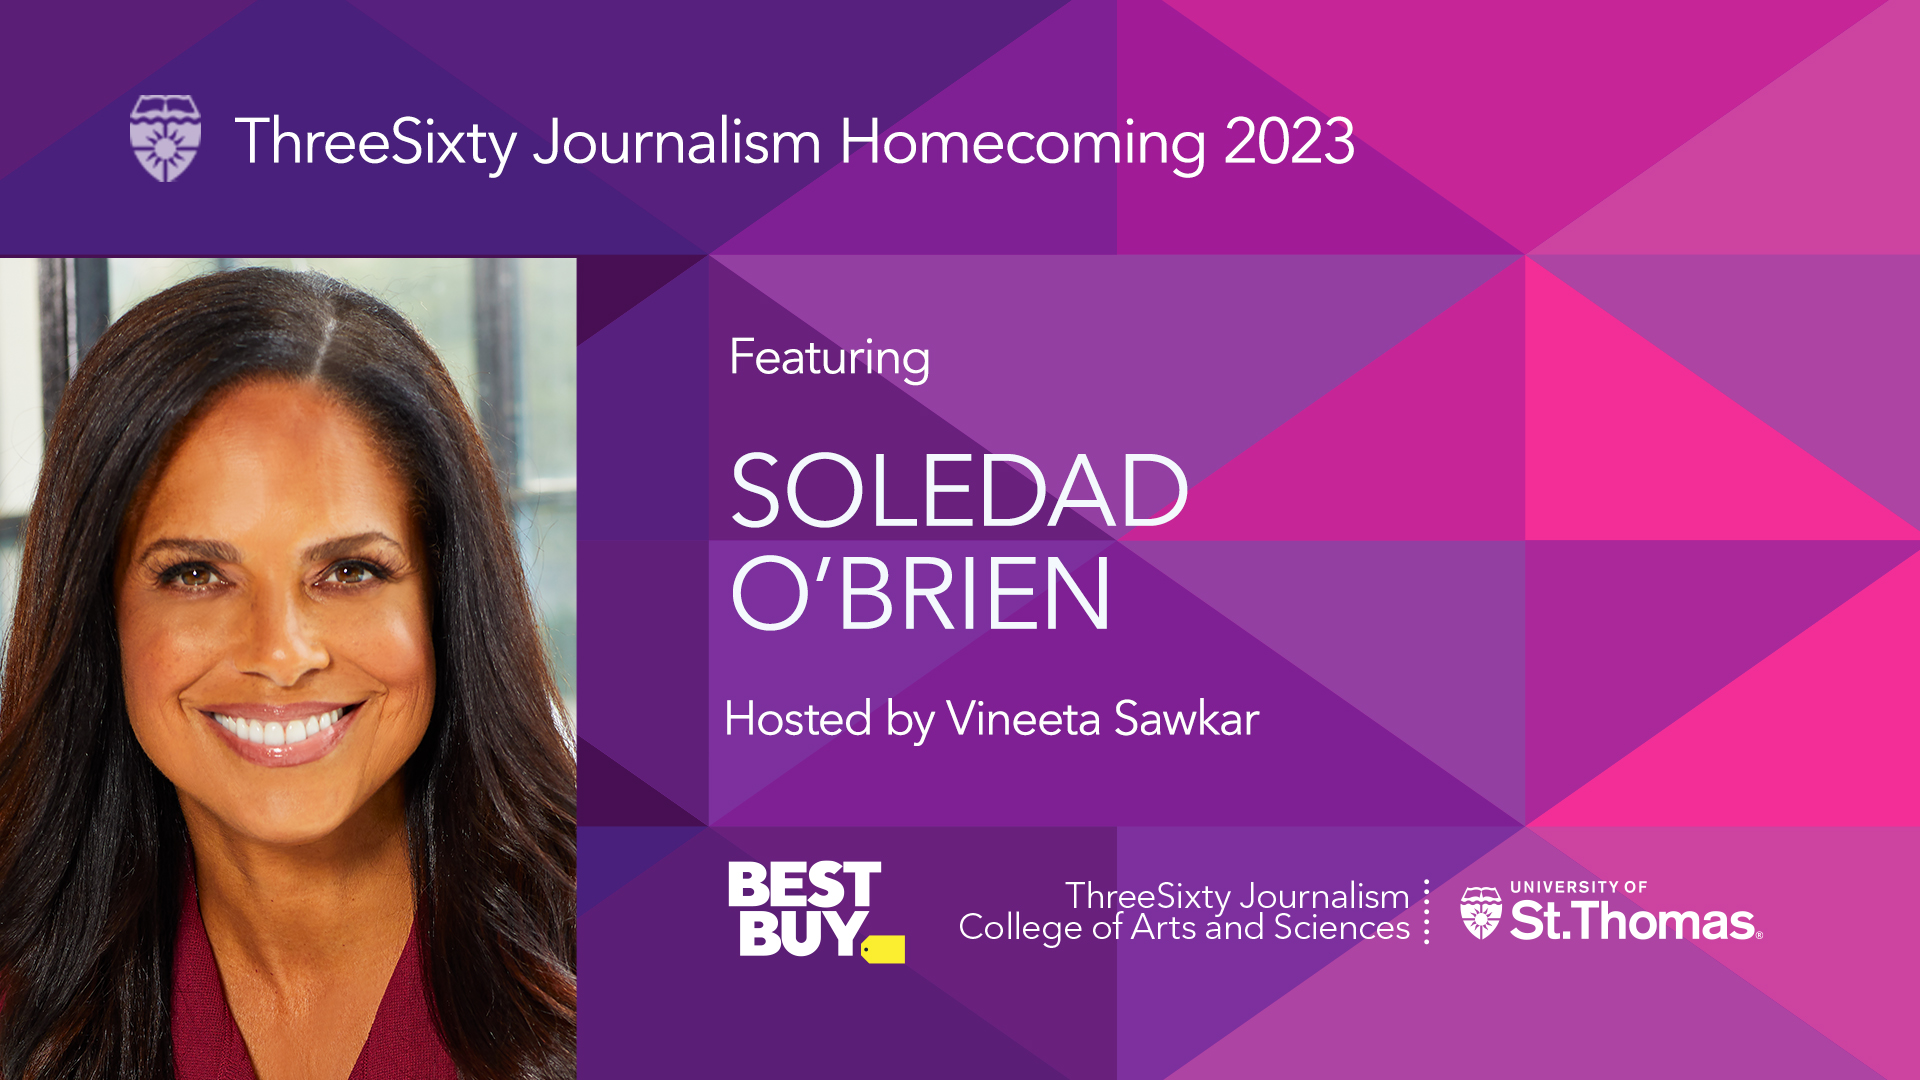 ThreeSixty Homecoming 2023: Featuring Soledad O'Brien. Hosted by Vineeta Sawkar. April 1, 2023.